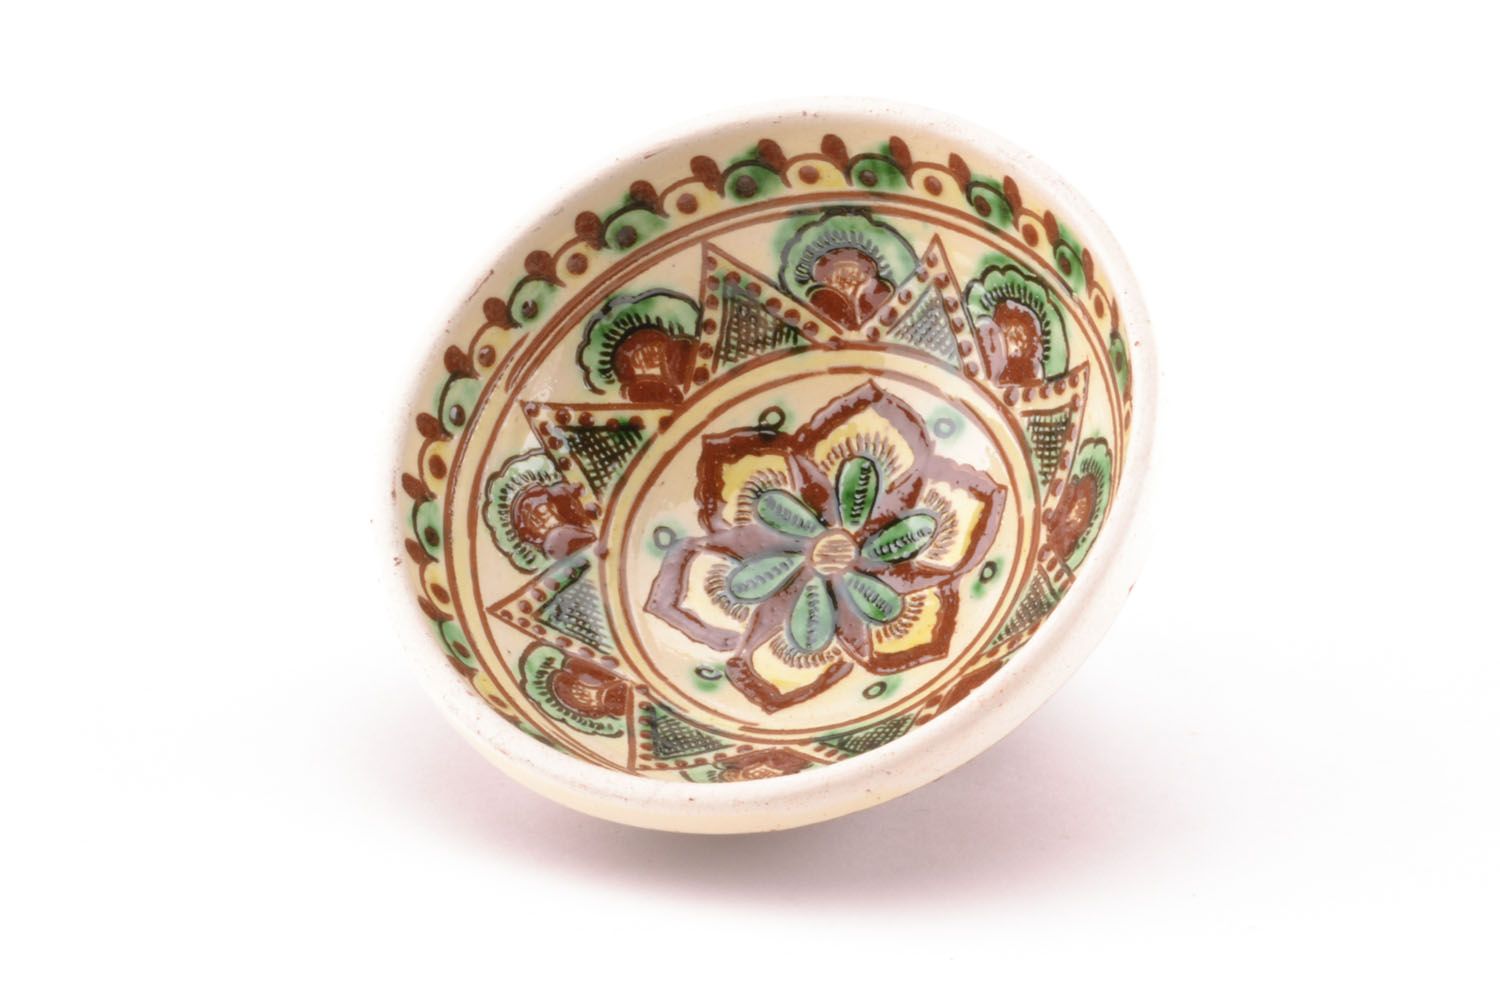 5 8 oz ceramic glazed village-style handmade pitch bowl 0,45 lb photo 2